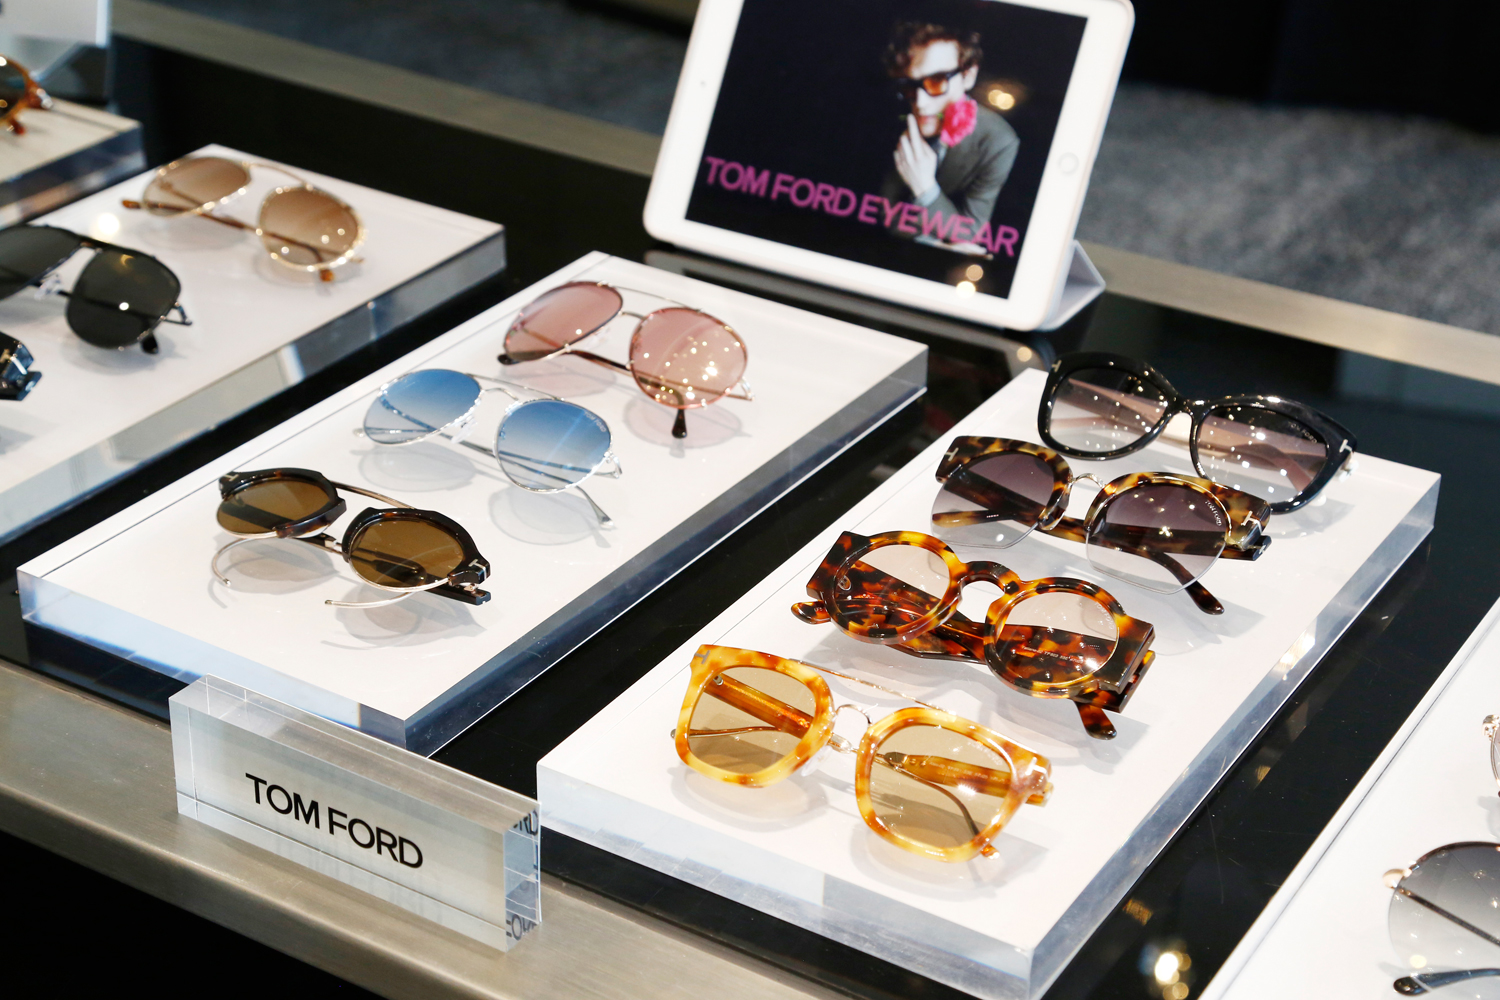 Tom Ford 2017年秋冬眼镜系列分别为男士及女士们推出了17款太阳眼镜和8款光学眼镜。系列包含了多款饰以奢华考究细节的经典款式，更包括各种以复古为灵感的镜架，并搭配怀旧色彩和金属细节。一如既往，以全新手法诠释经典造型，专为Tom Ford 带来独一无二、极具标志性的成品。